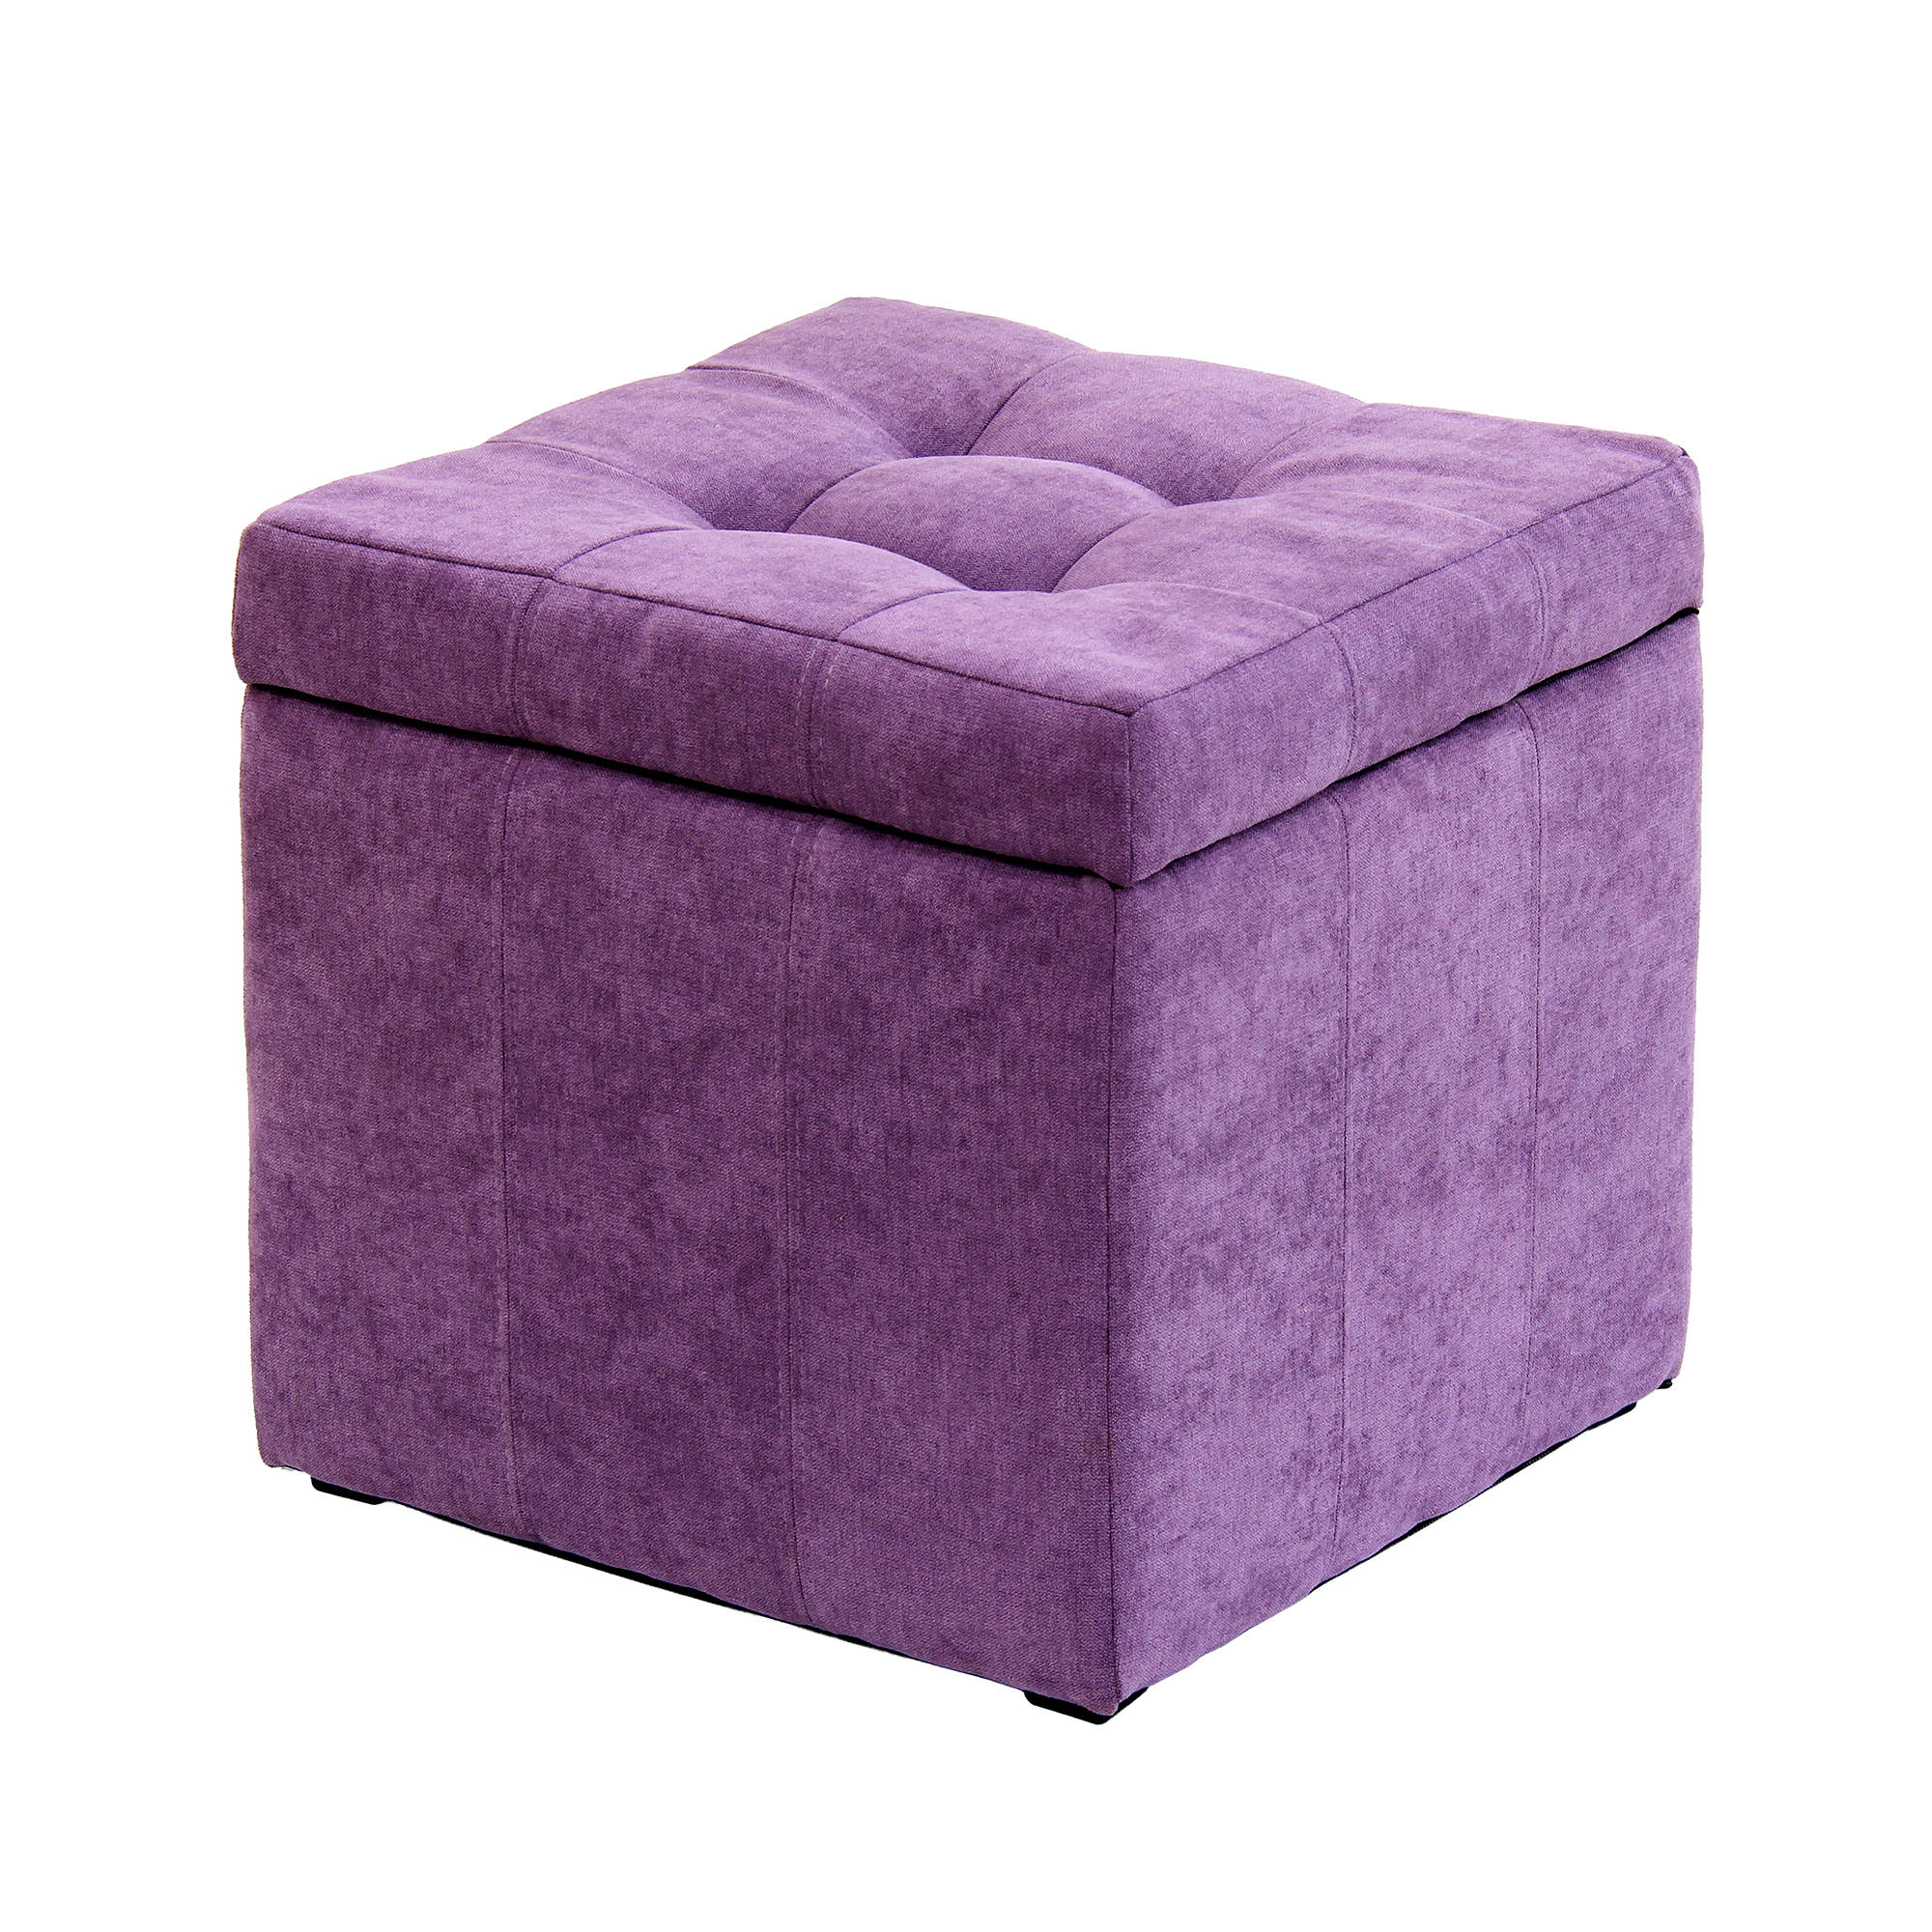 Банкетка Dreambag модерна фиолетовый велюр 46х46х46, размер 46х46х46 см - фото 1